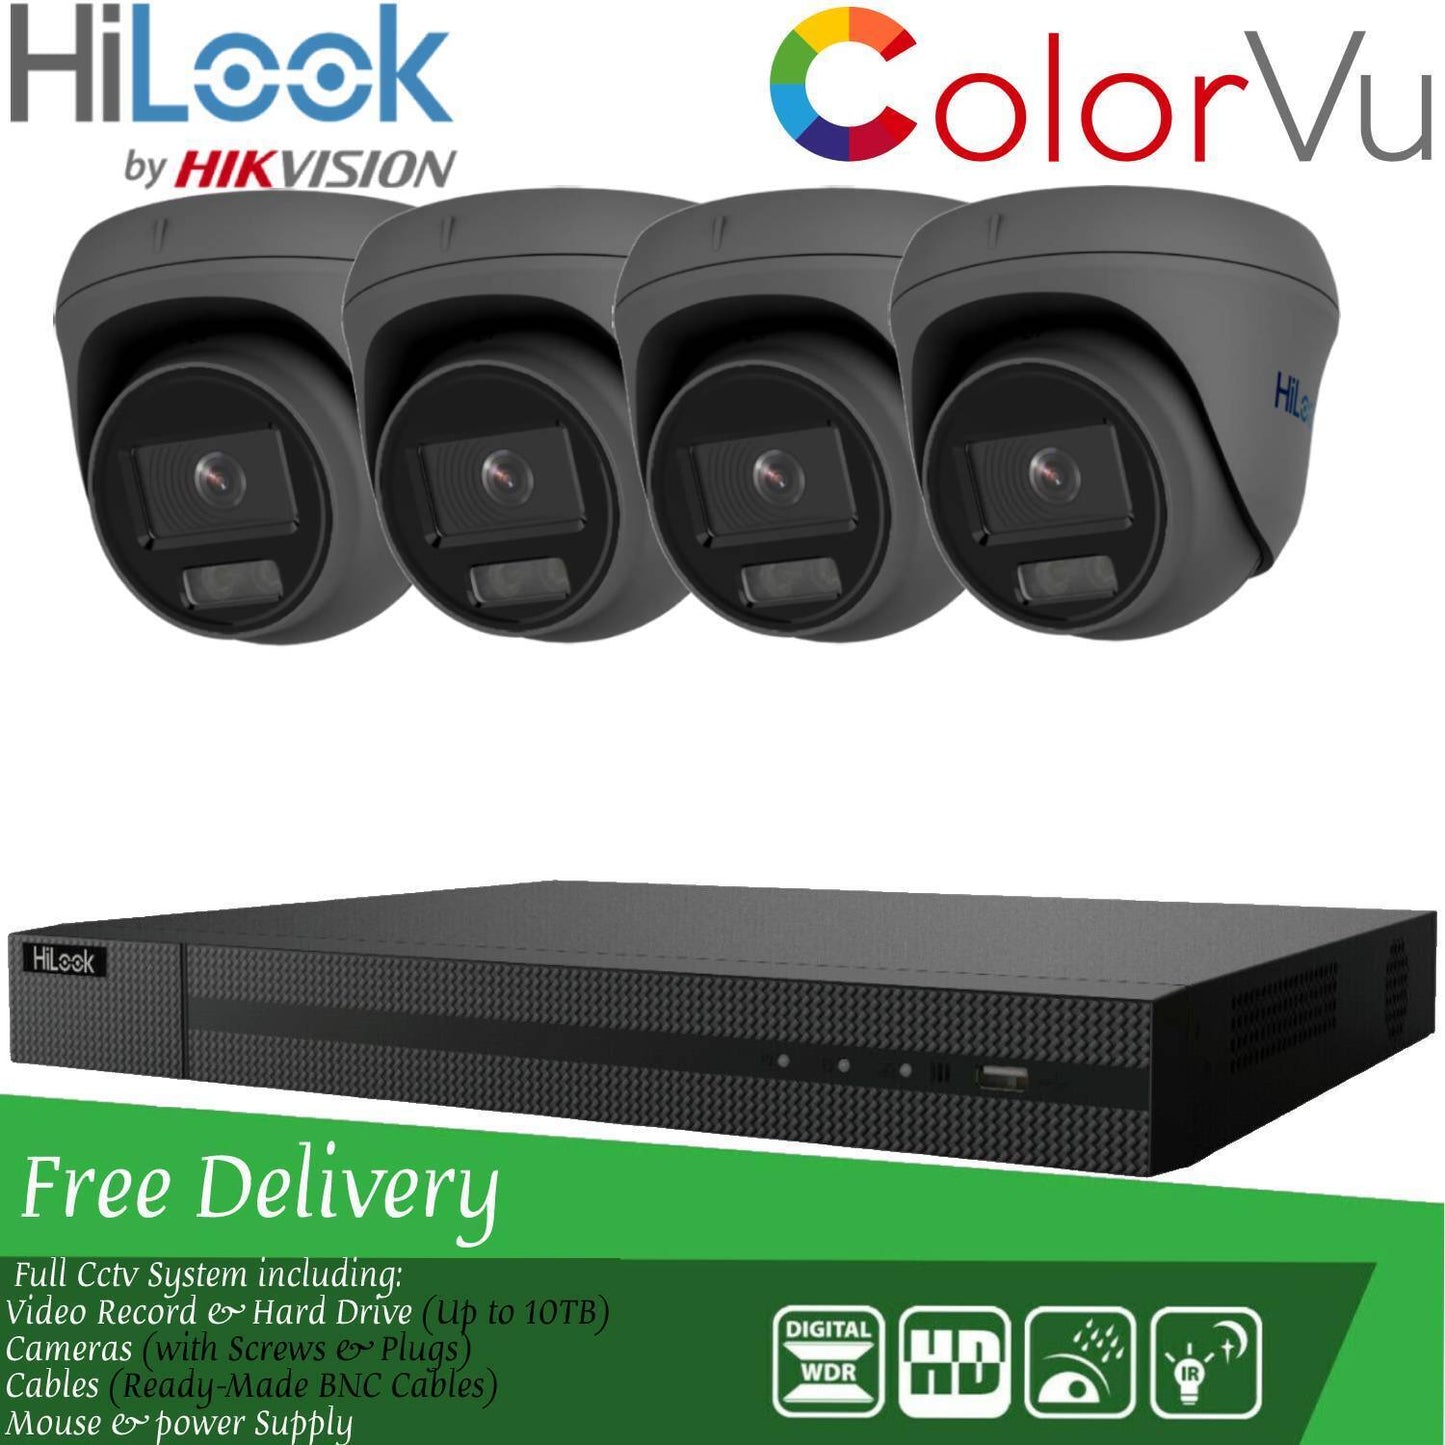 HIKVISION COLORVU POE CCTV SYSTEM IP UHD 8MP NVR 4K 5MP 24/7 COLORVU CAMERA KIT 4CH NVR 4x Cameras (grey) 6TB HDD